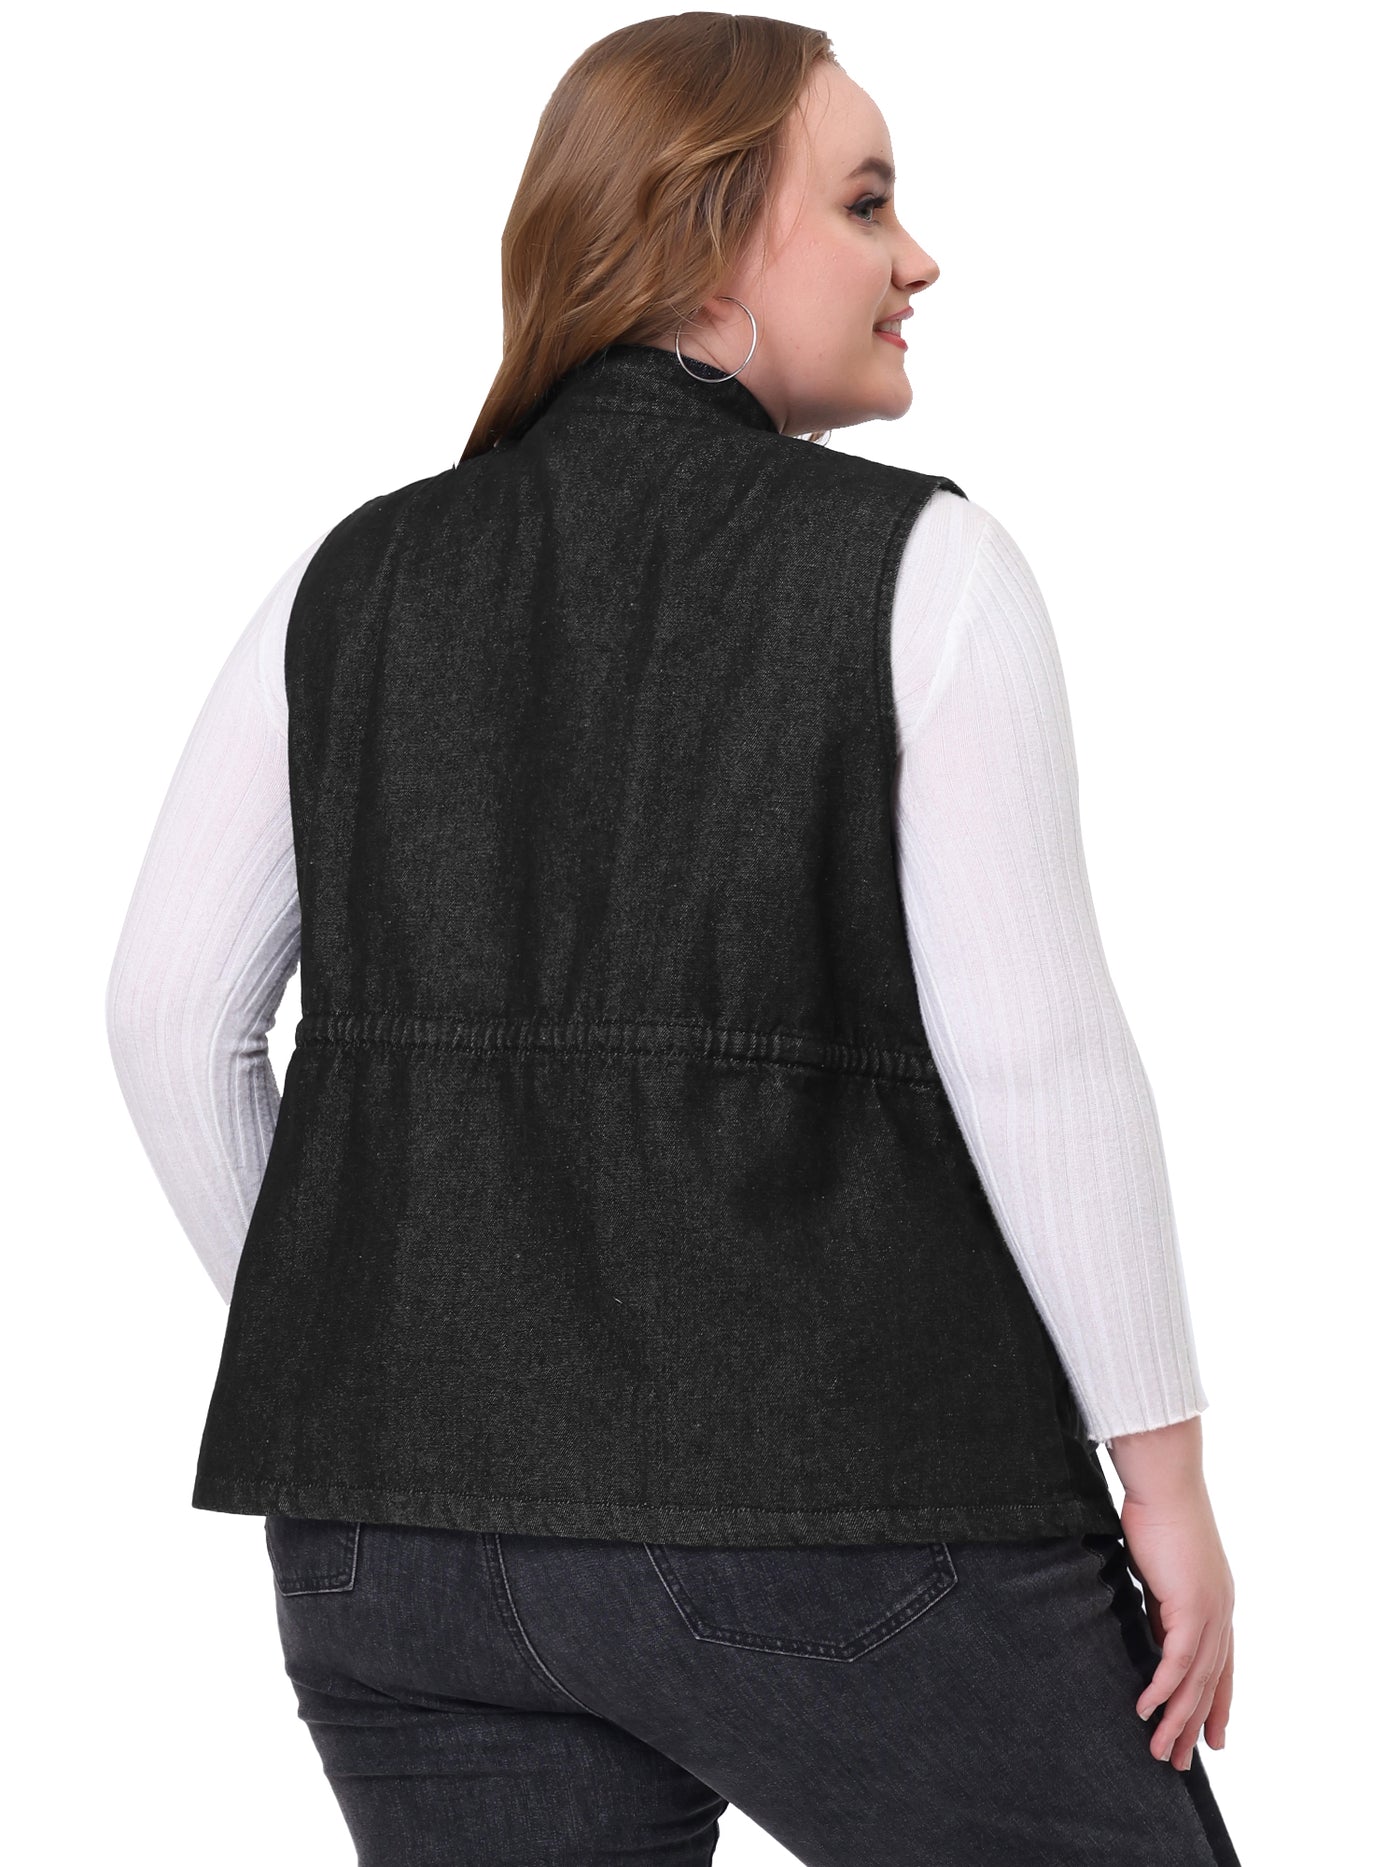 Bublédon Plus Size Utility Vest for Women Lightweight Sleeveless Anorak Cargo Drawstring Jean Denim Jacket